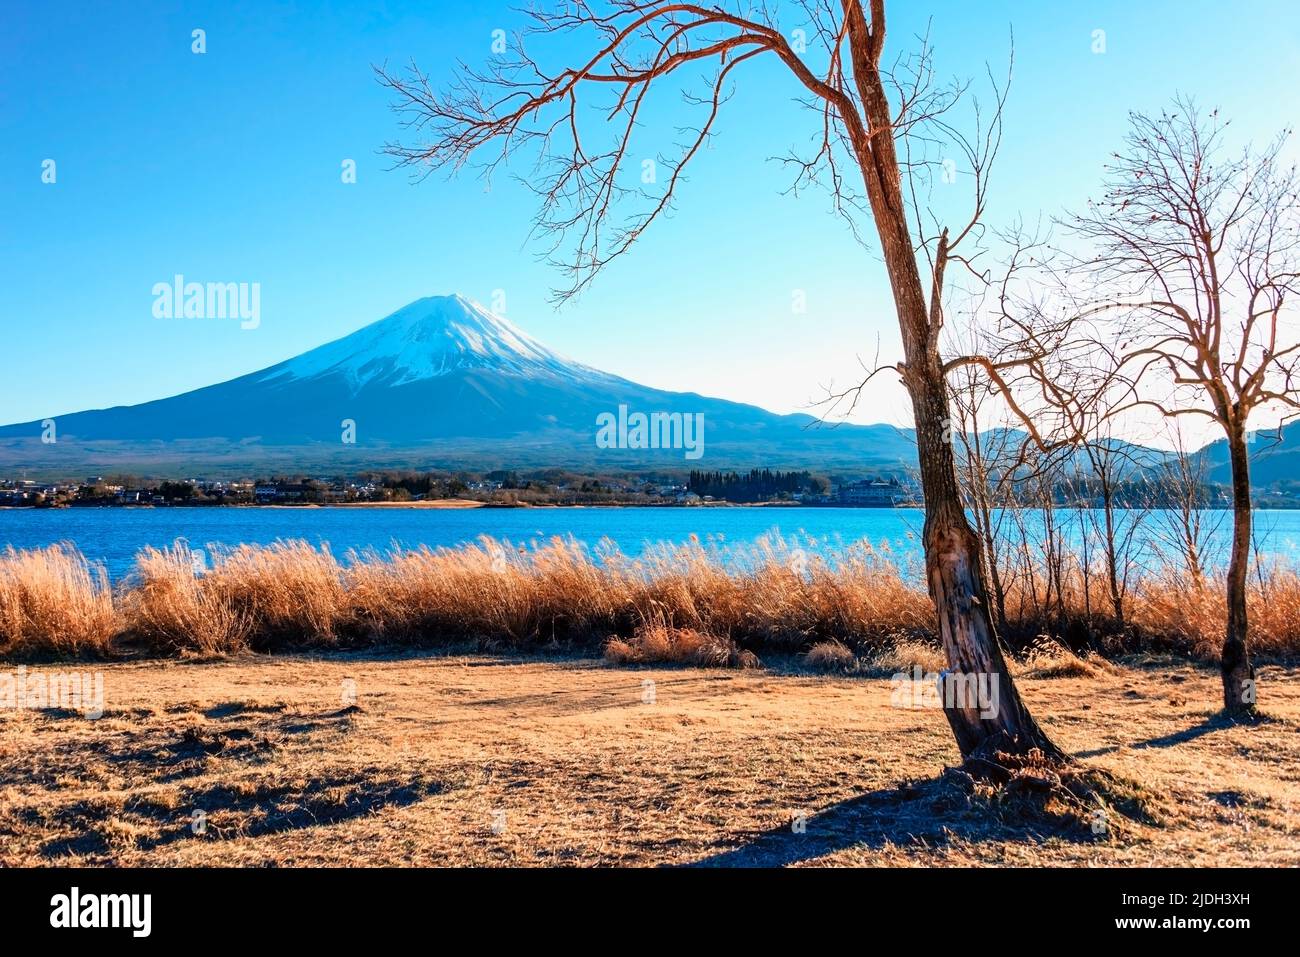 Mount Fuji viewed from the Kawaguchi lake, Japan Stock Photo